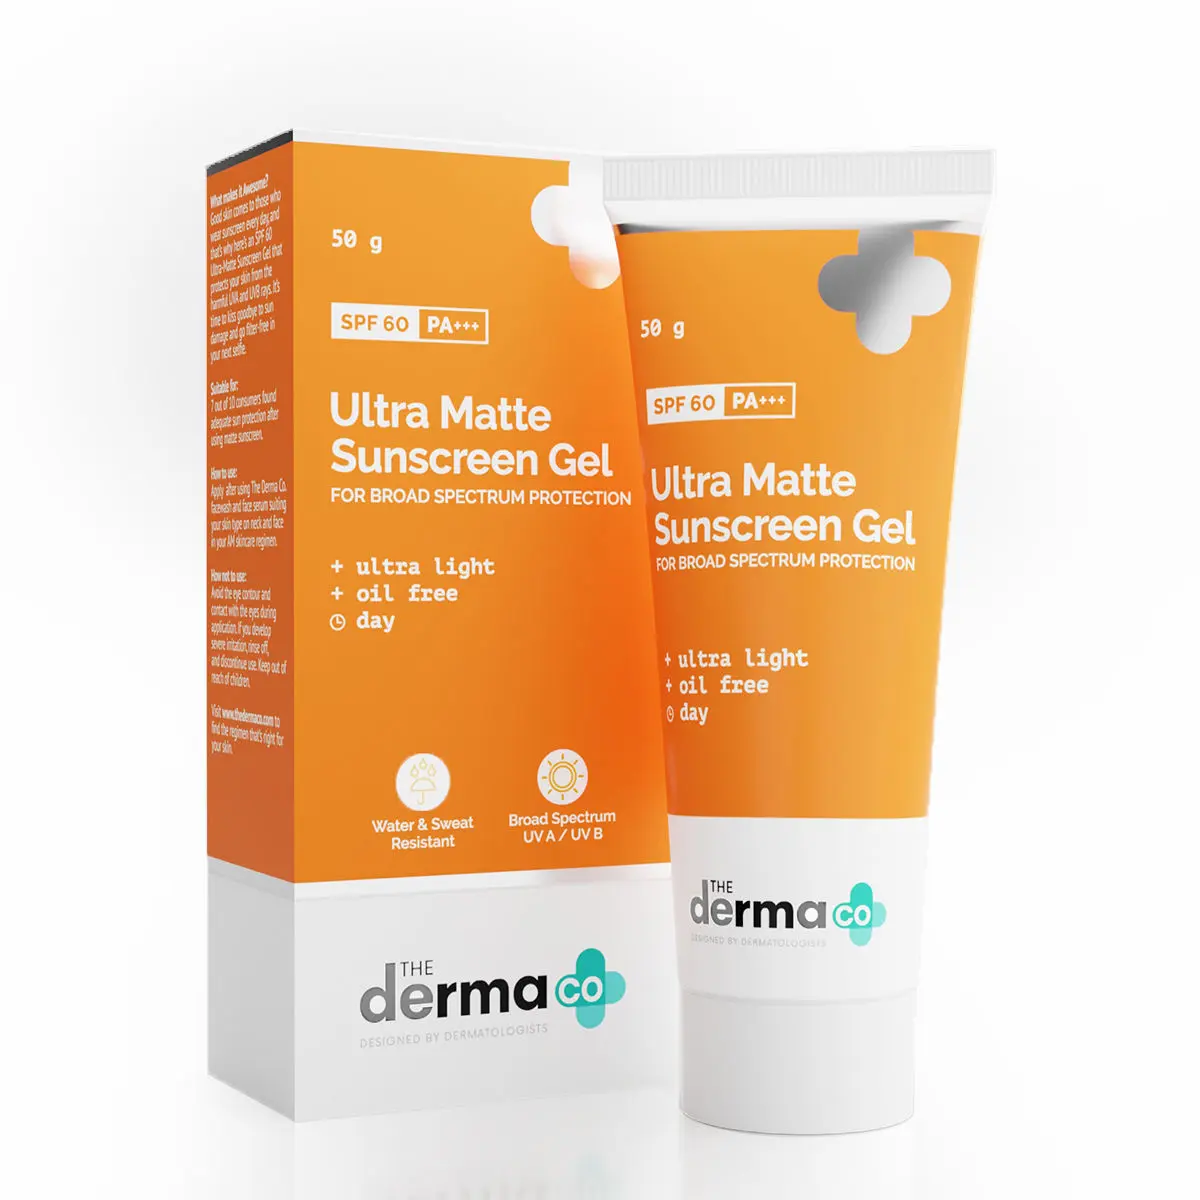 The Derma co. Ultra Matte Sunscreen Gel with SPF 60